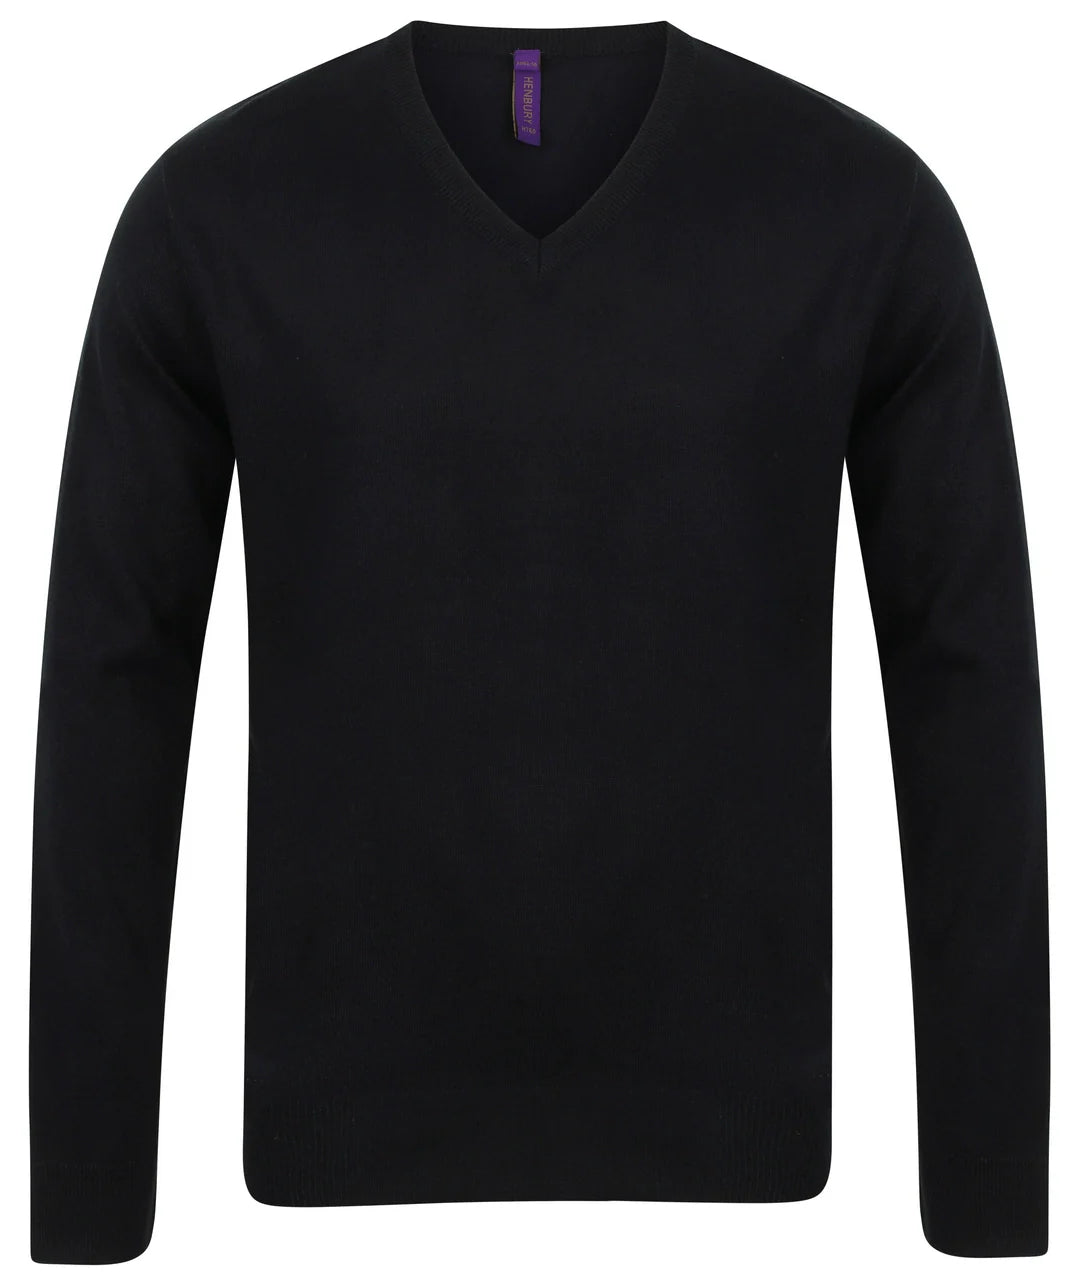 Henbury Lightweight Cotton Acrylic V Neck Sweater HB720 - COOZO